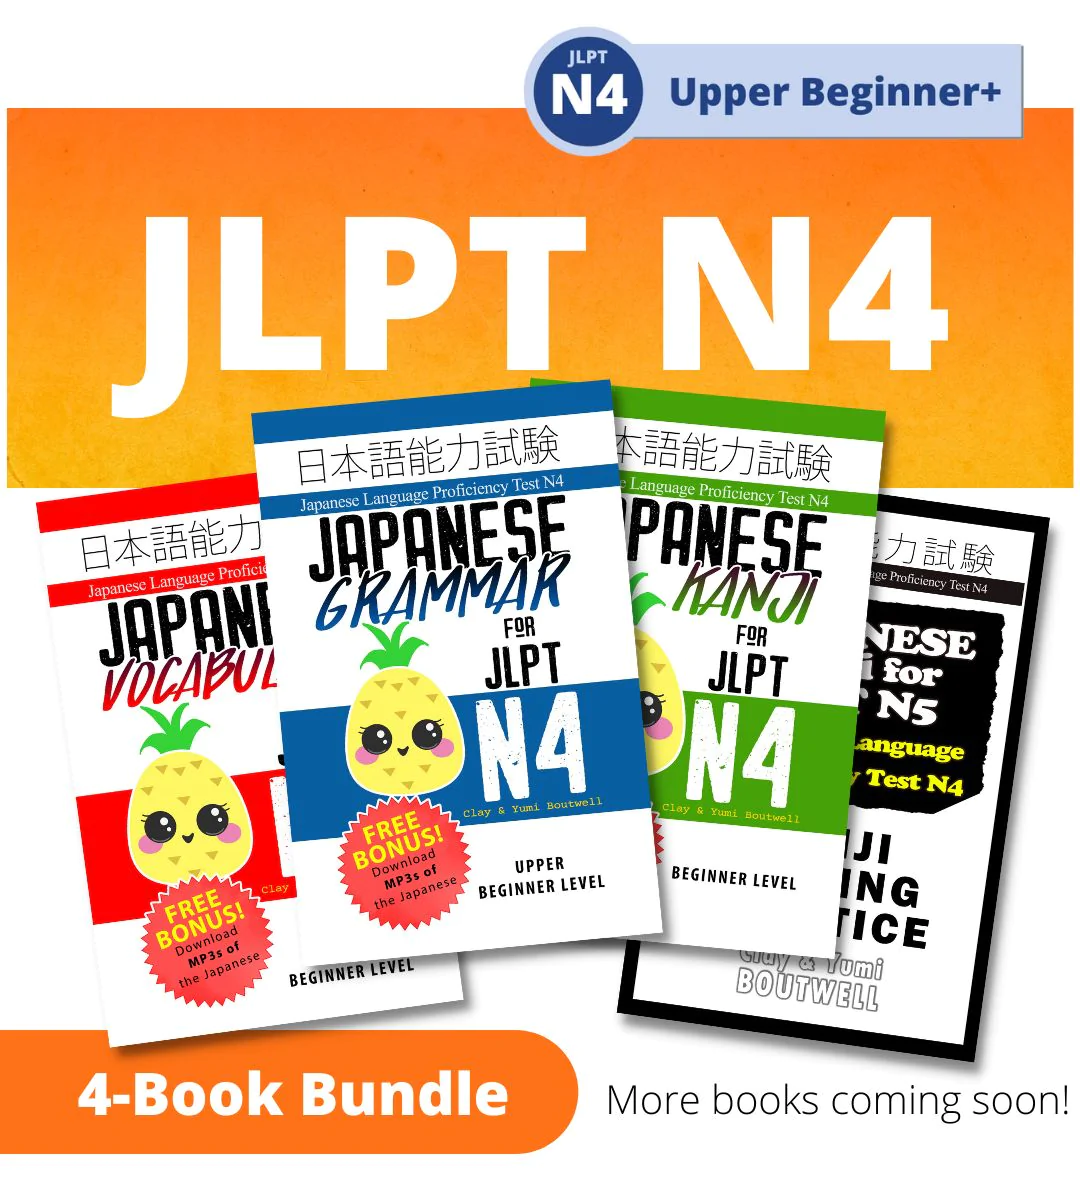 Learn JLPT N4 Vocabulary: 素晴らしい (subarashii) –